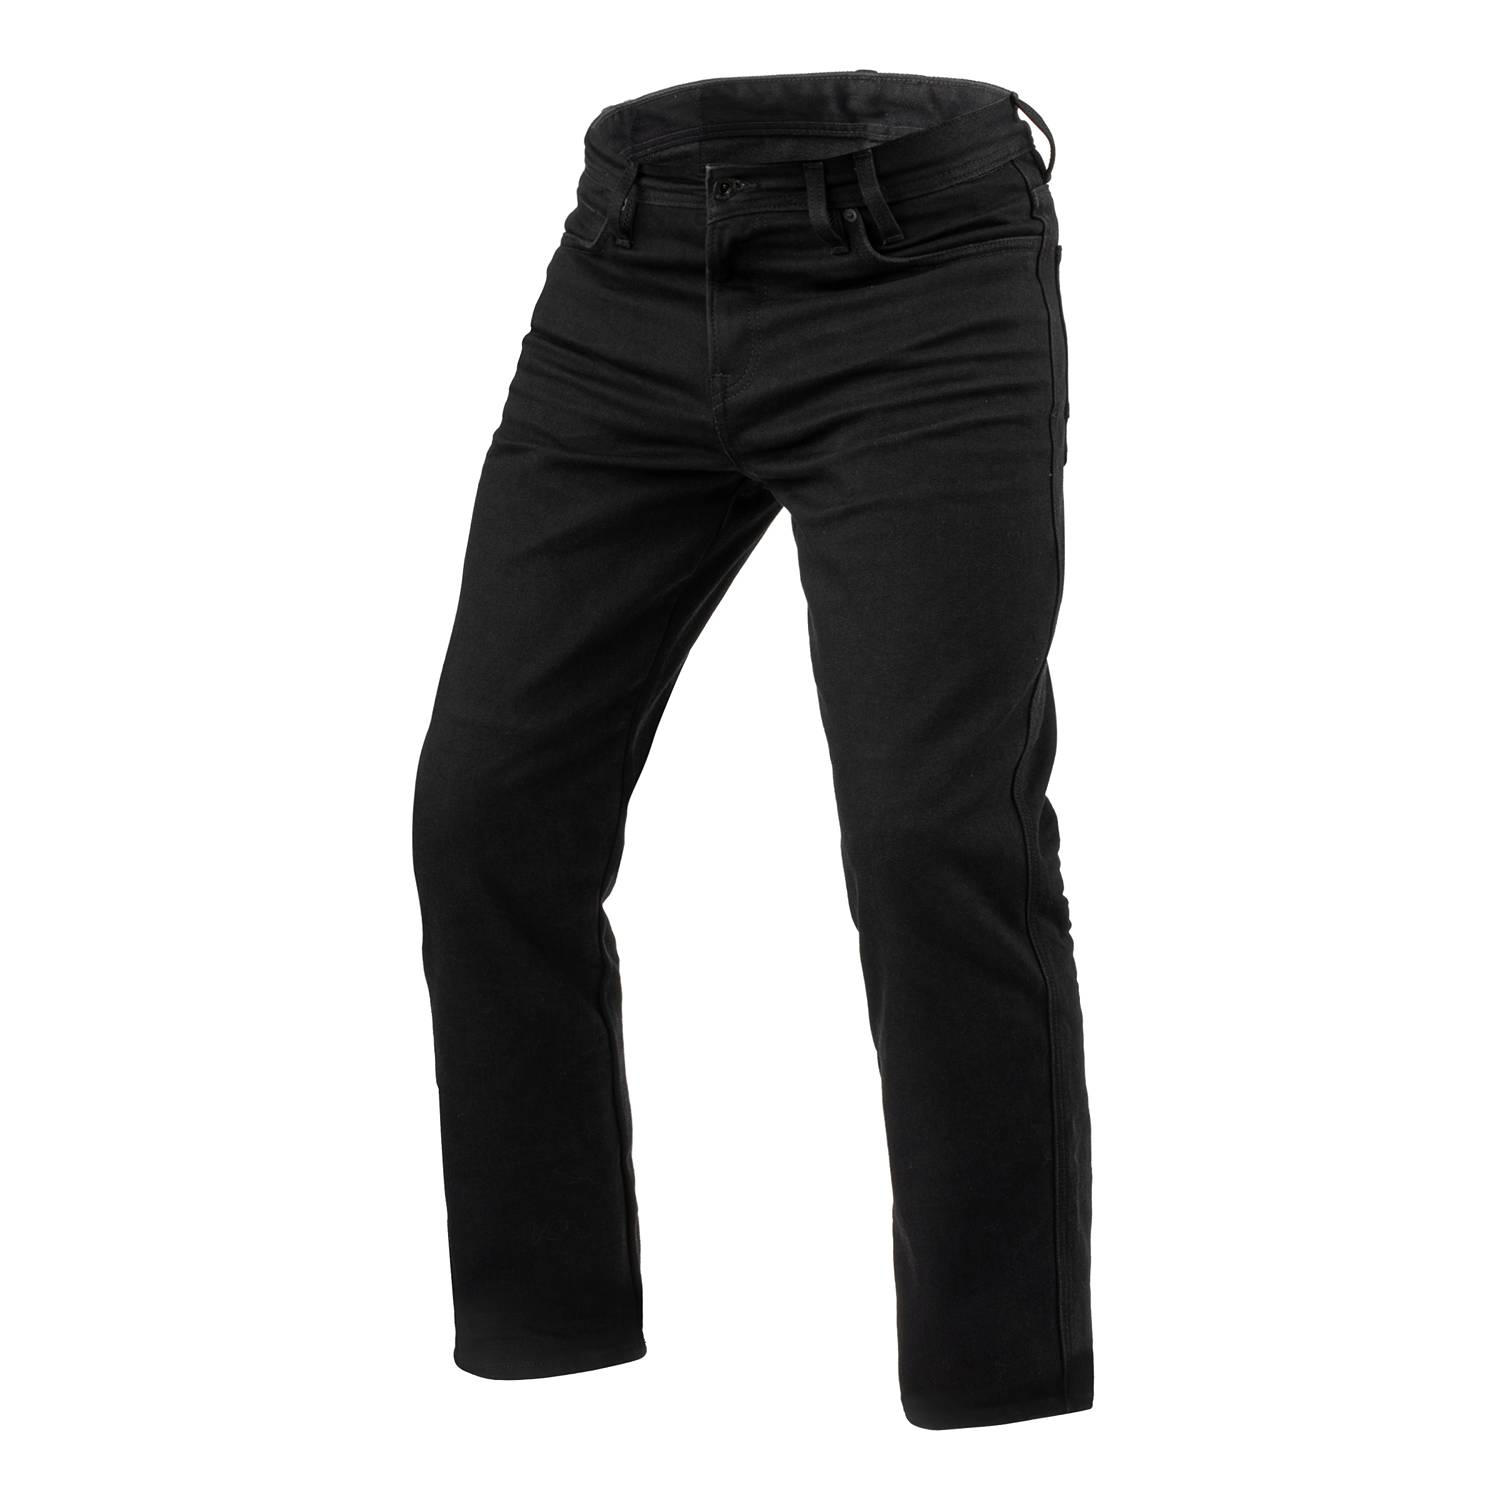 Image of REV'IT! Jeans Lombard 3 RF Black L36 Motorcycle Jeans Talla L36/W30